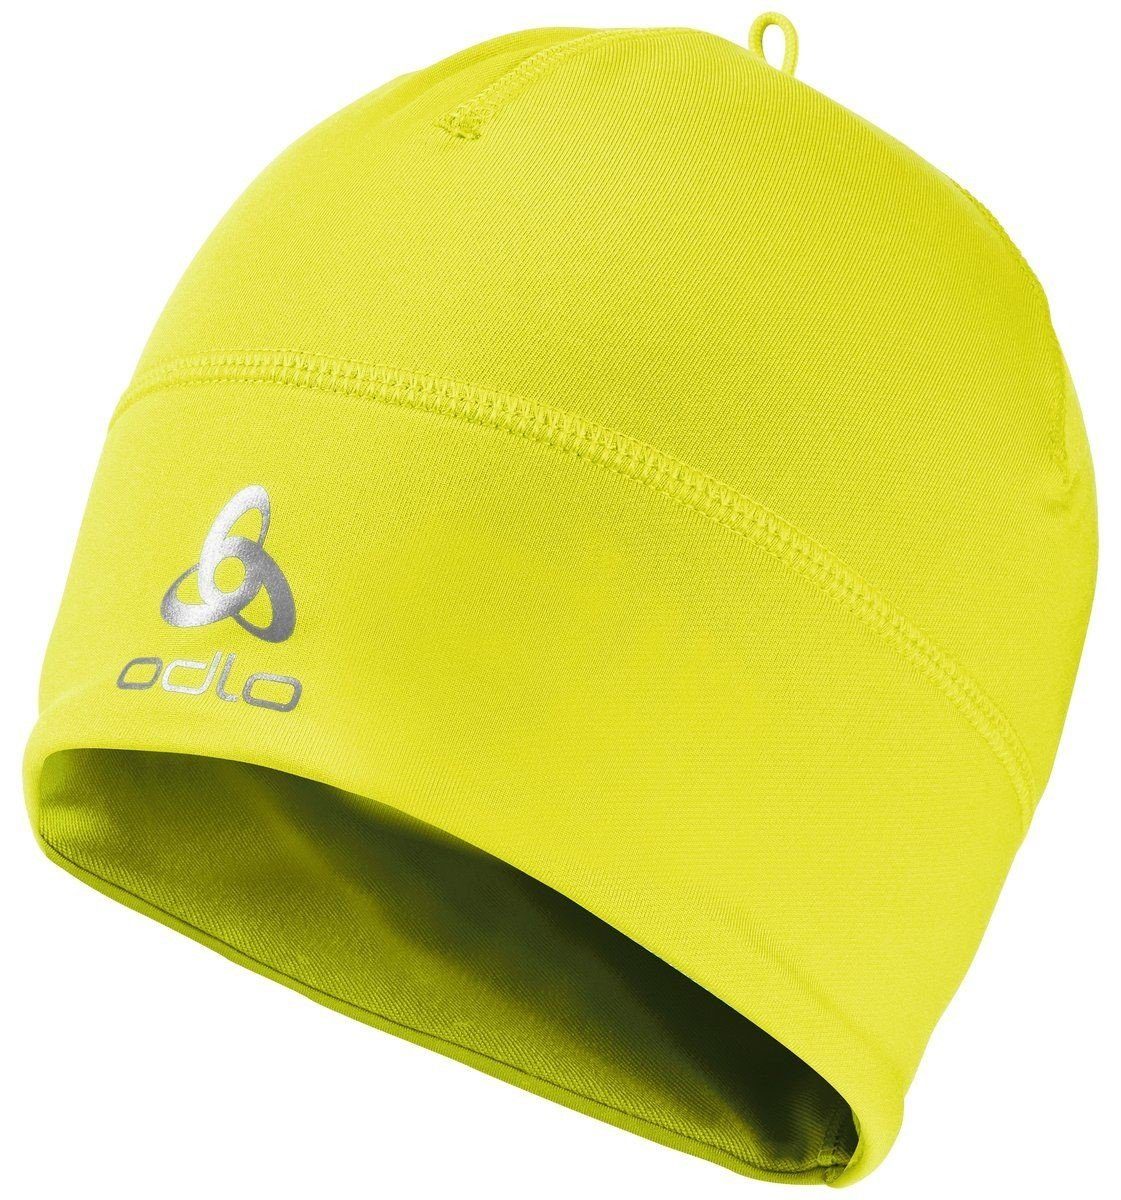 Odlo Baseball Cap Hat POLYKNIT WARM ECO 50016 safety yellow